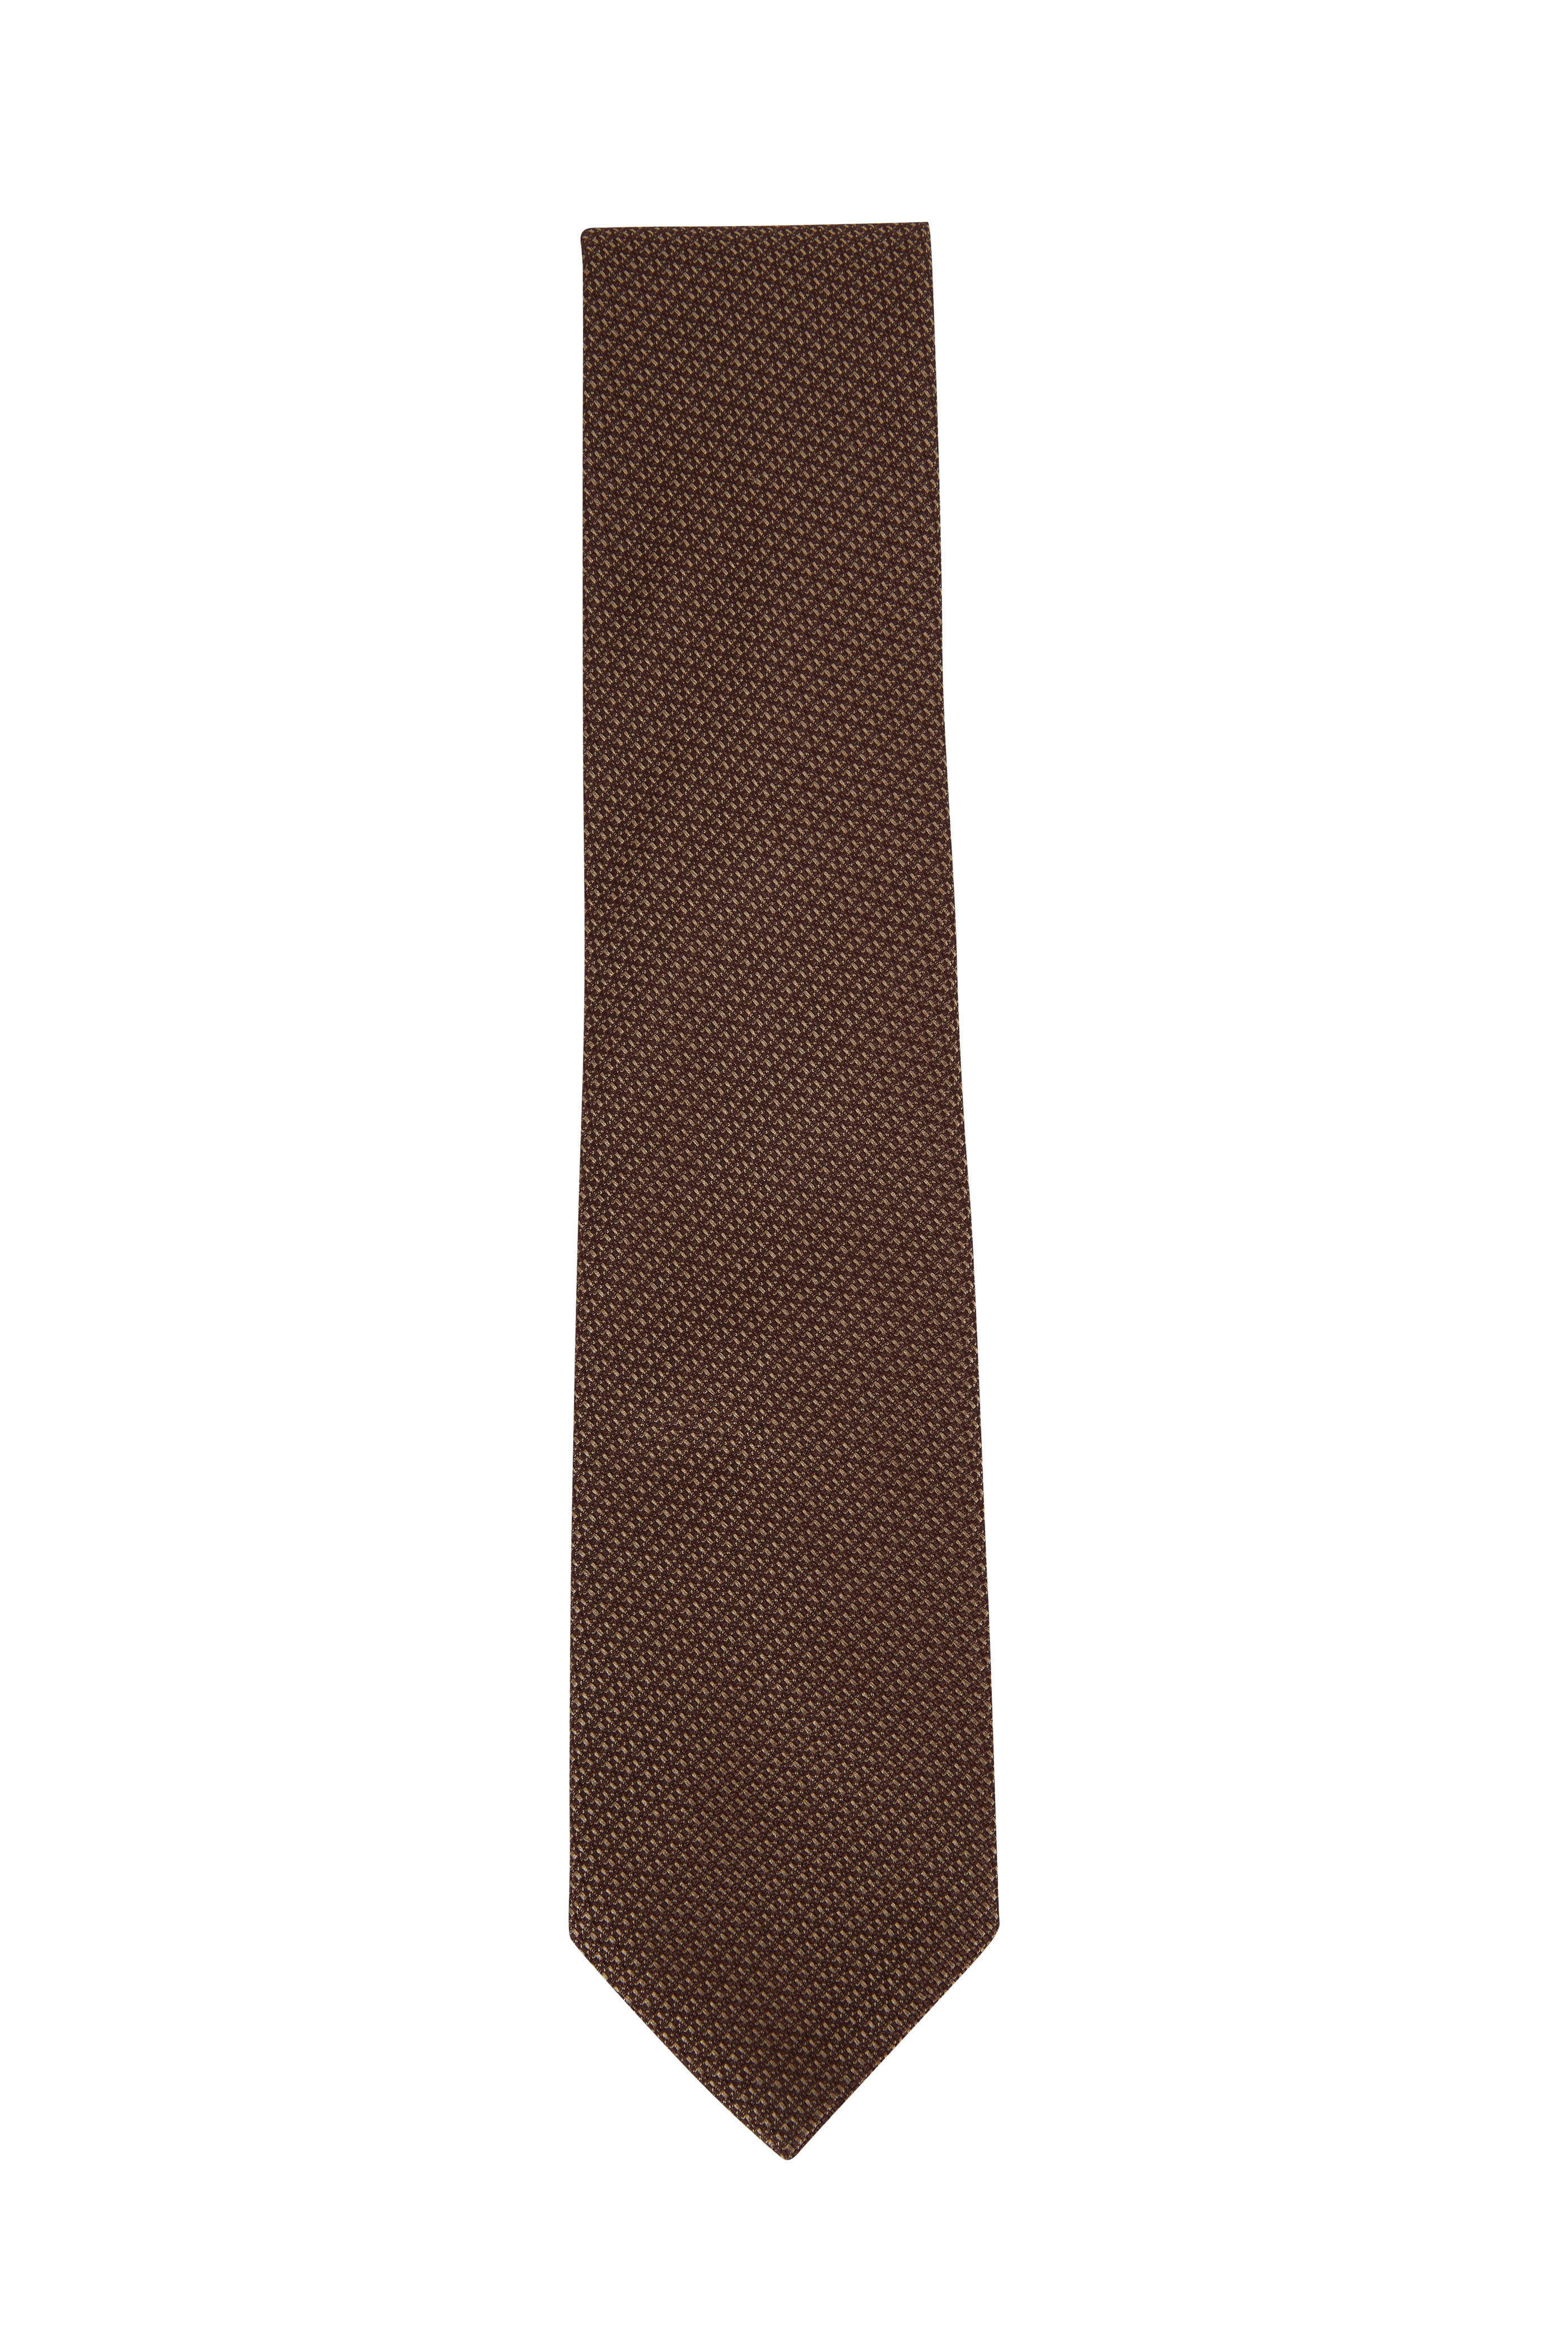 Brown silk tie  Brioni® CA Official Store